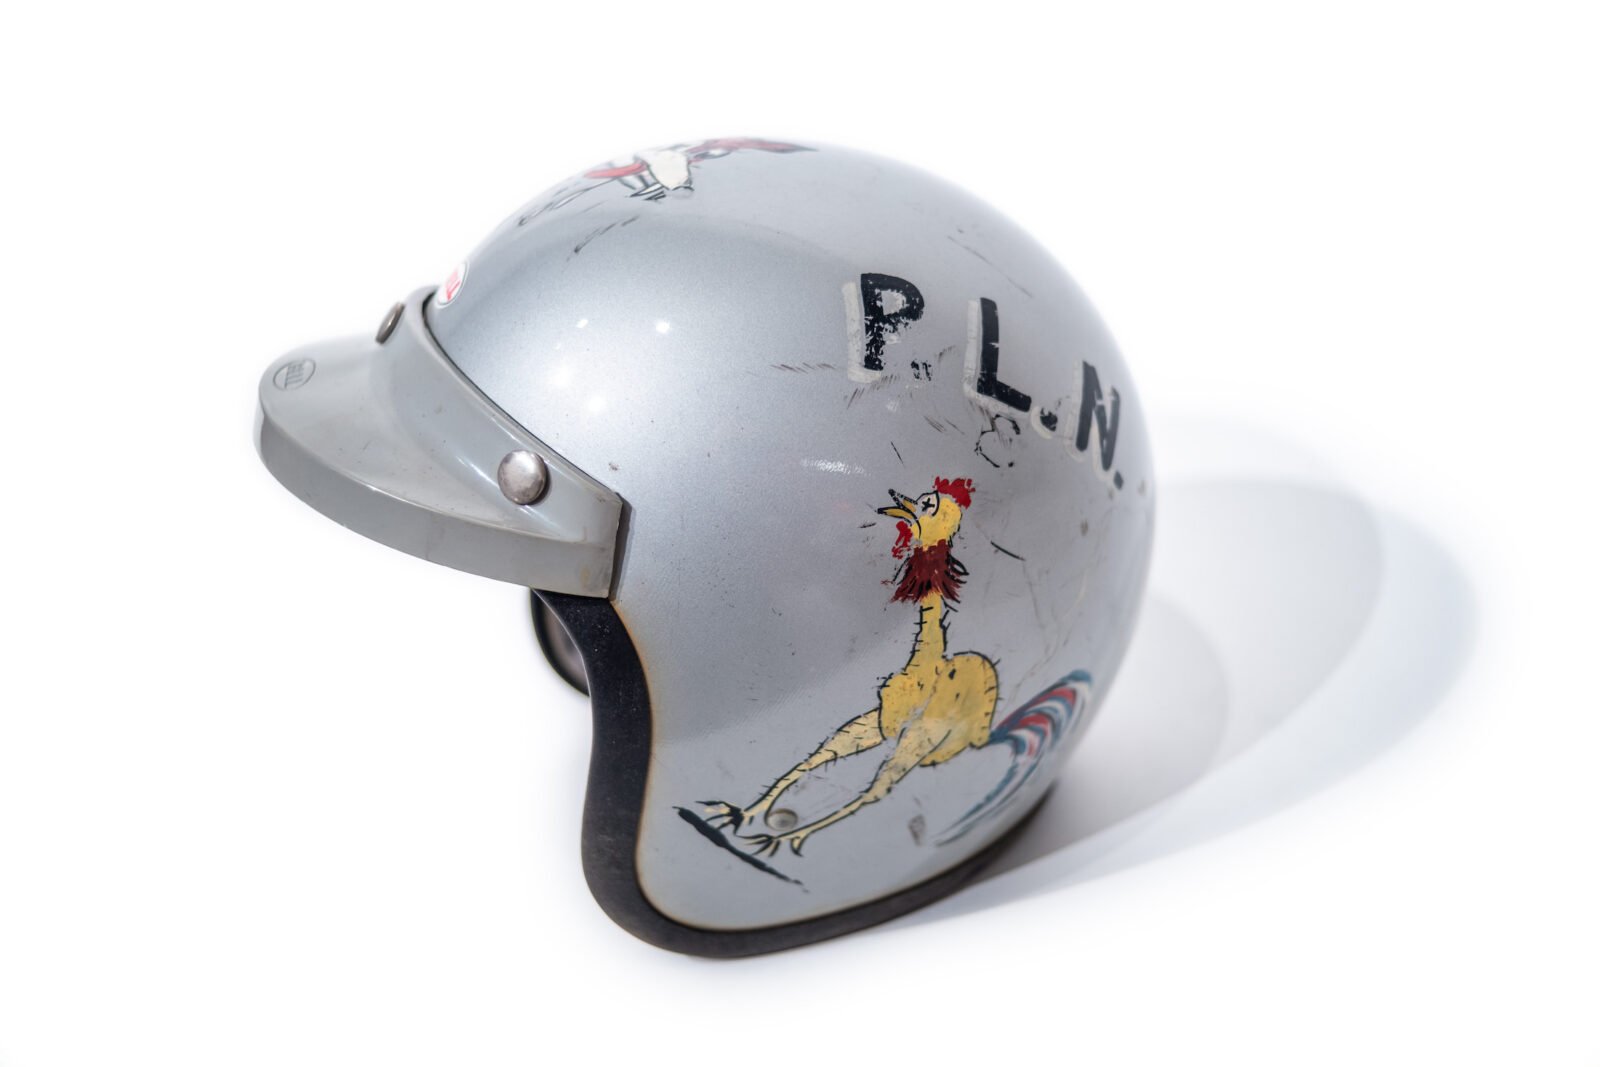 Paul Newman Racing Helmets 4